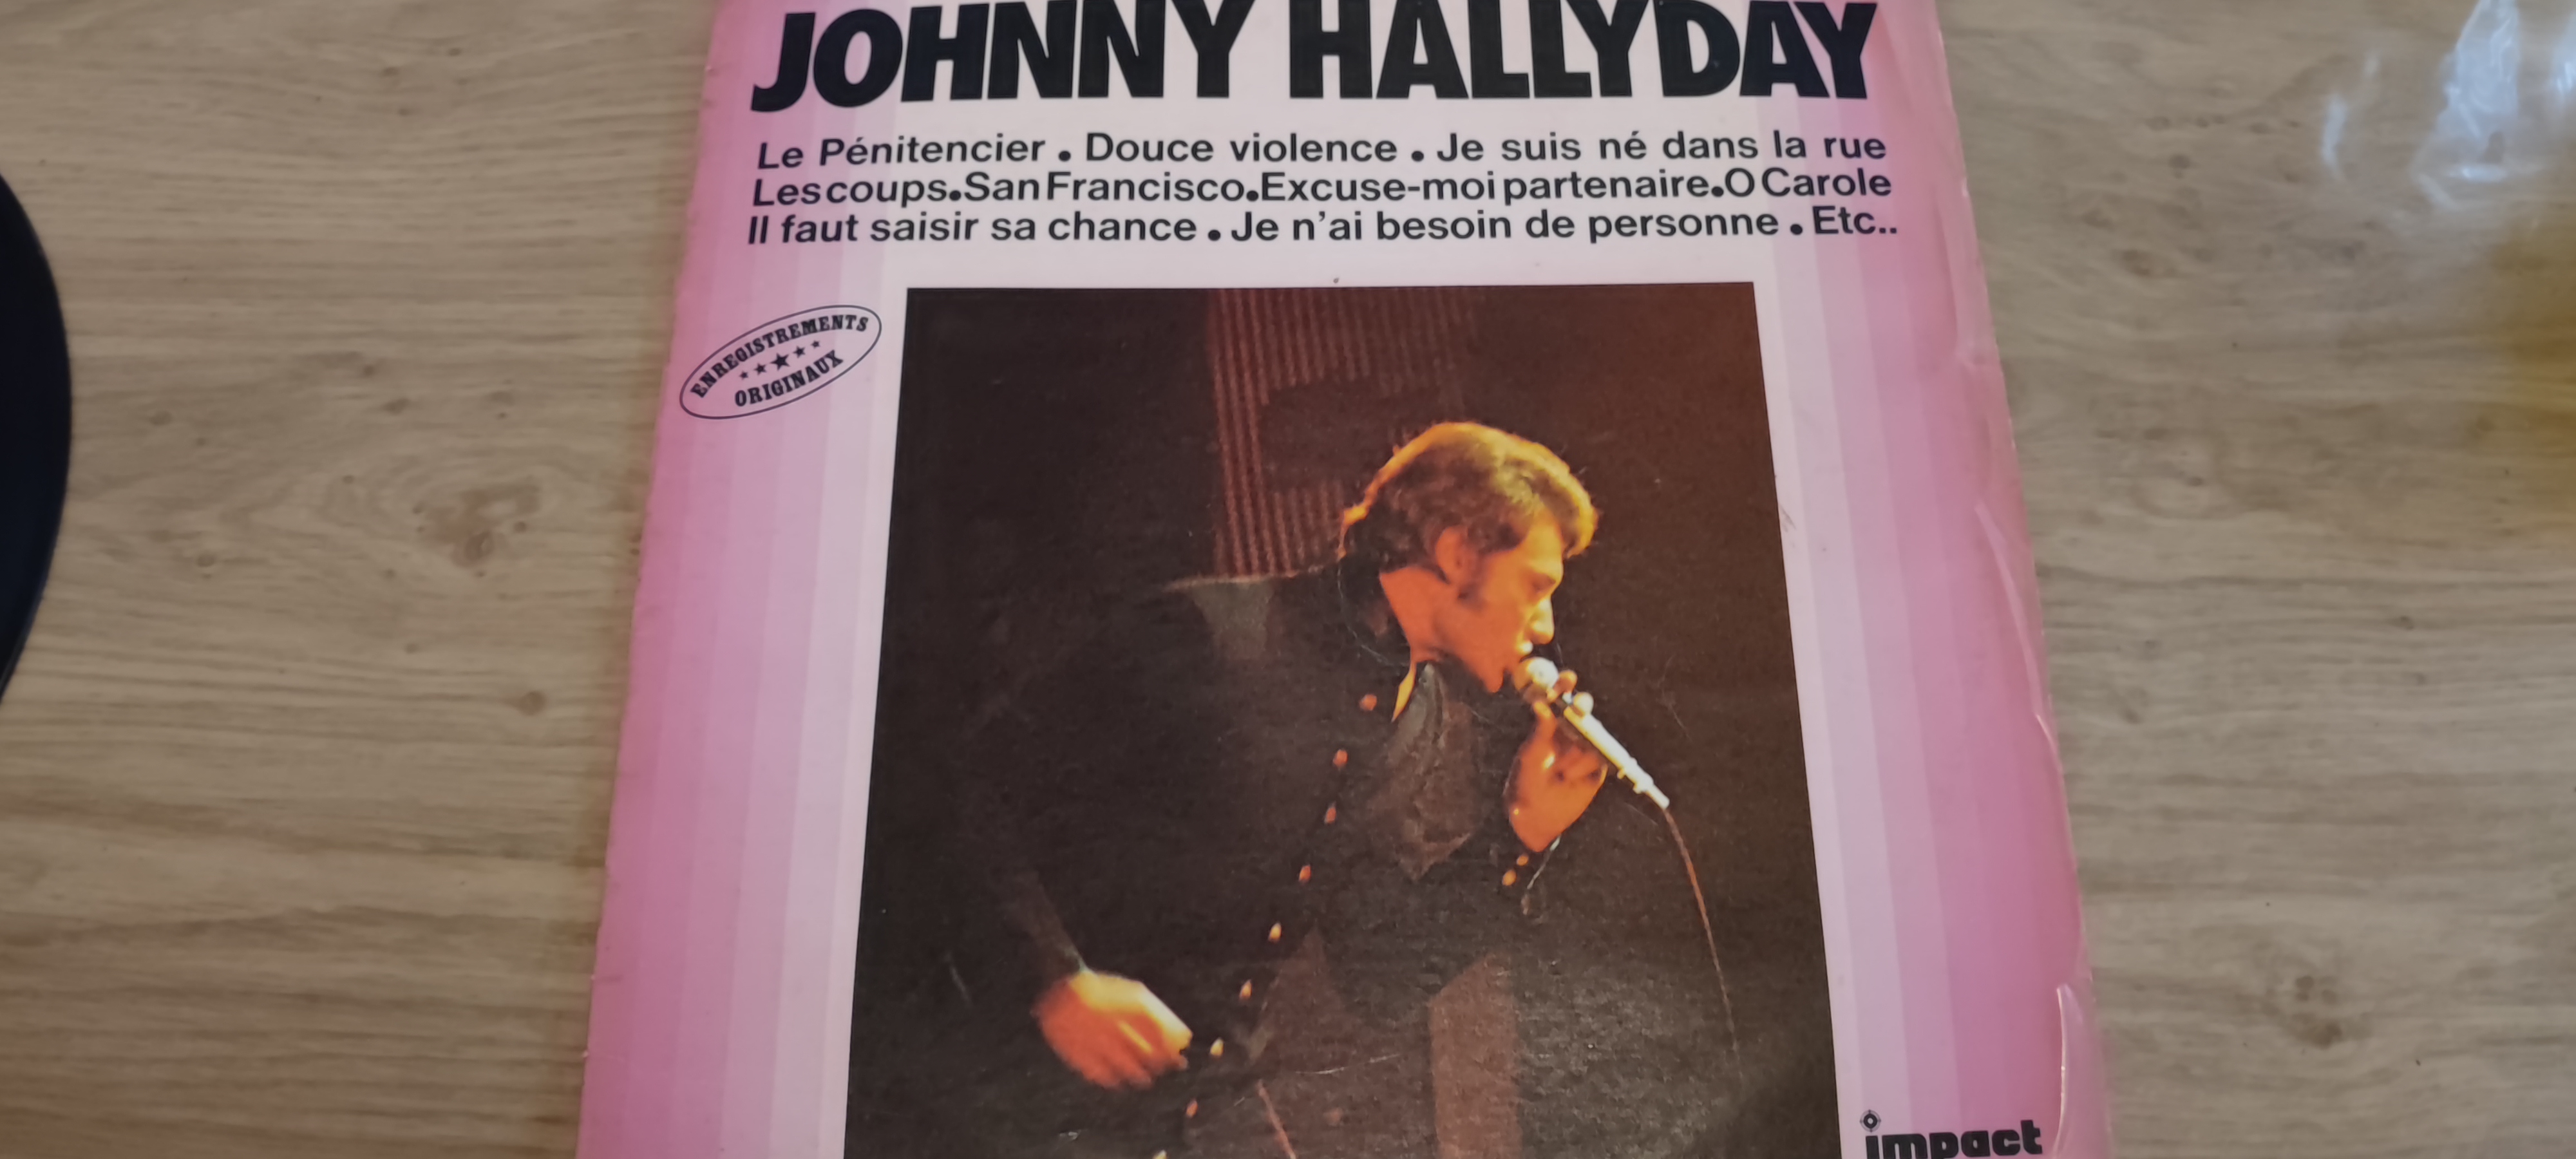 Acheter disque vinyle Johnny Hallyday Le pénitencier a vendre